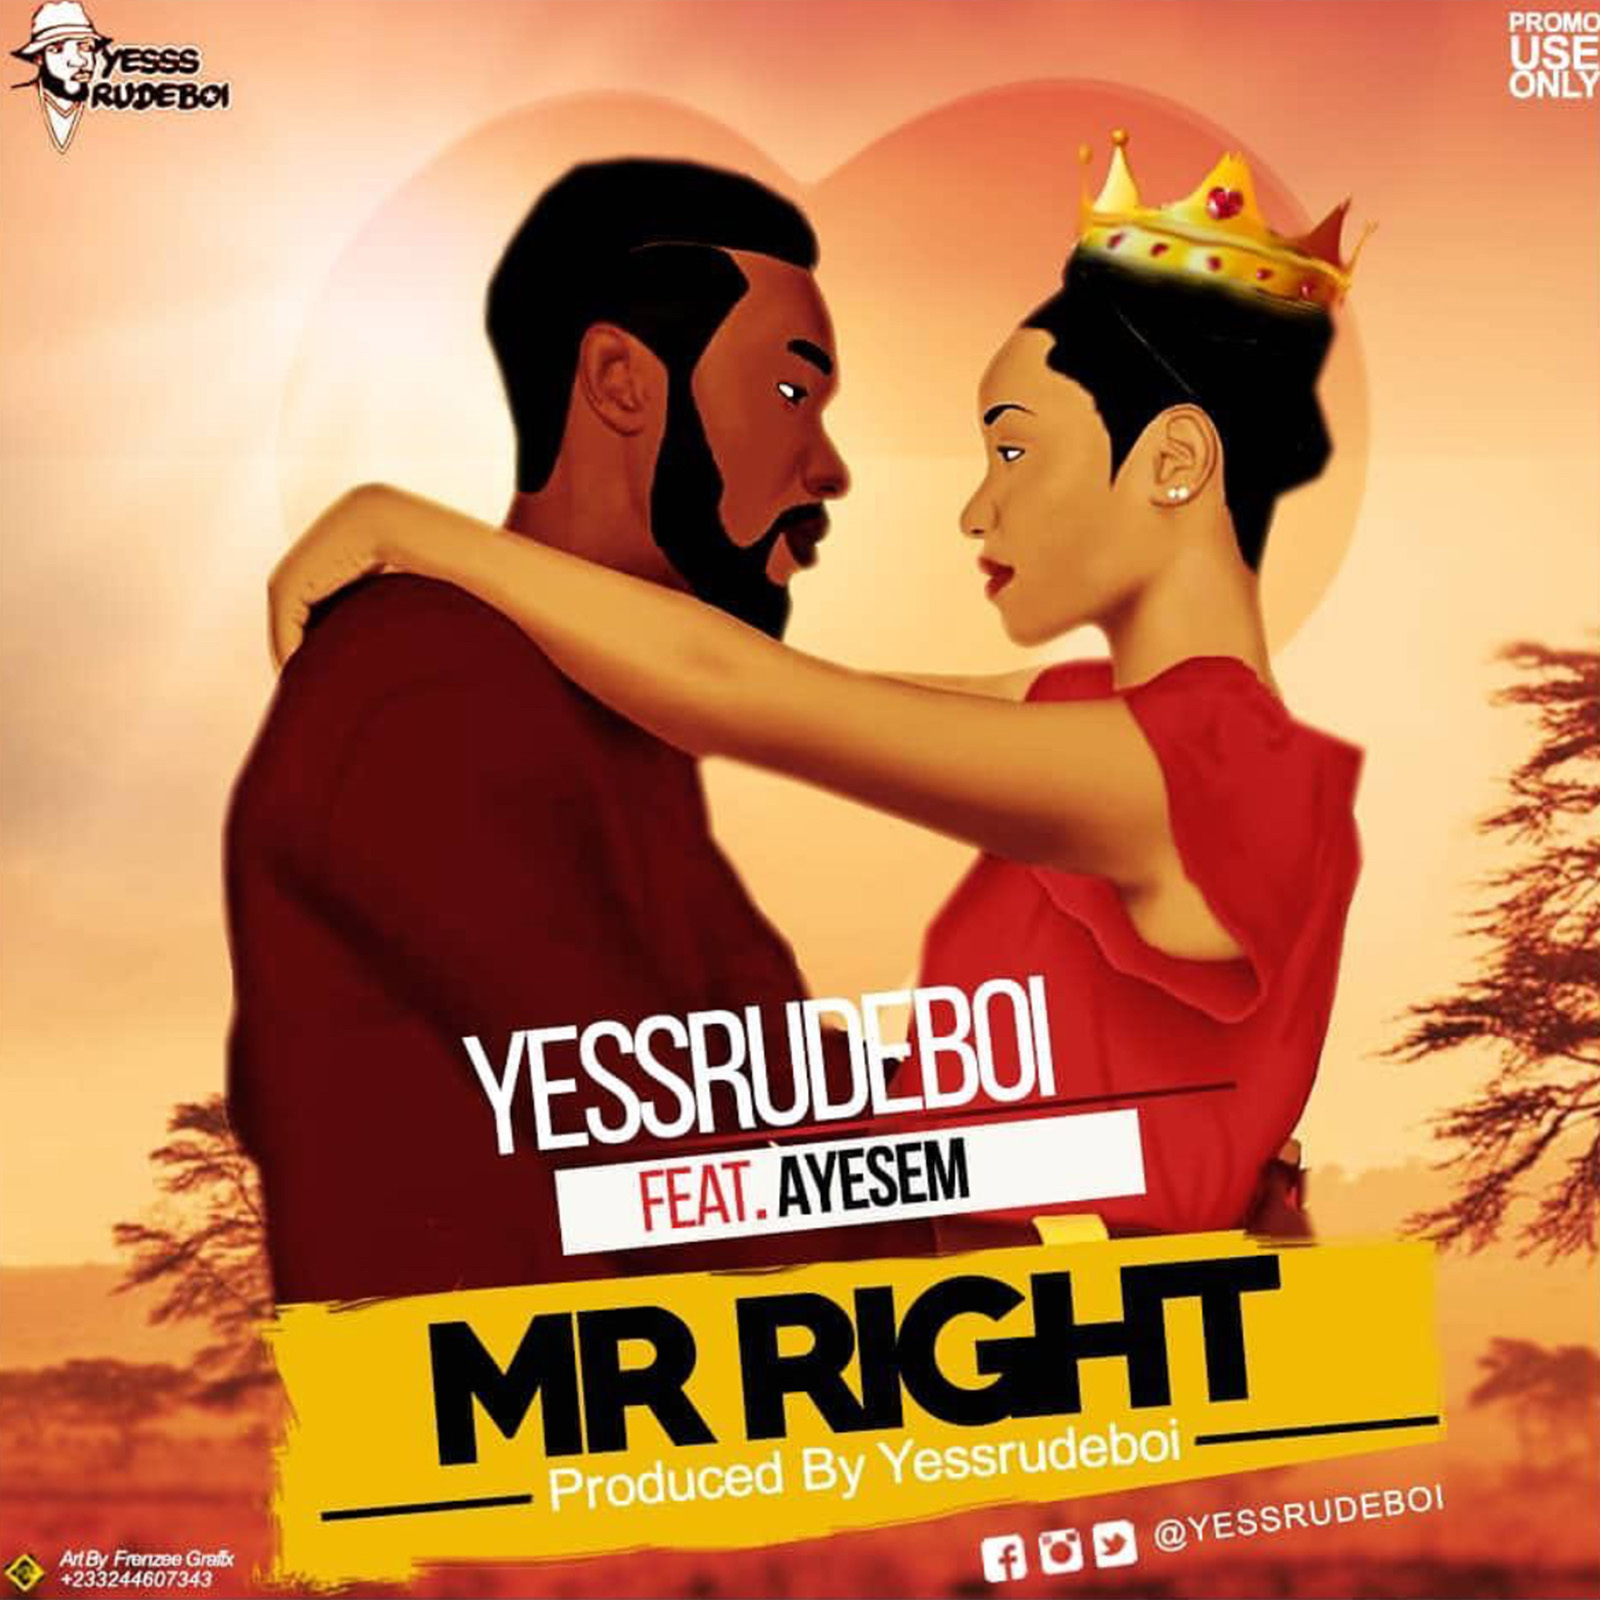 Mr Right by Yessrudeboi feat. Ayesem